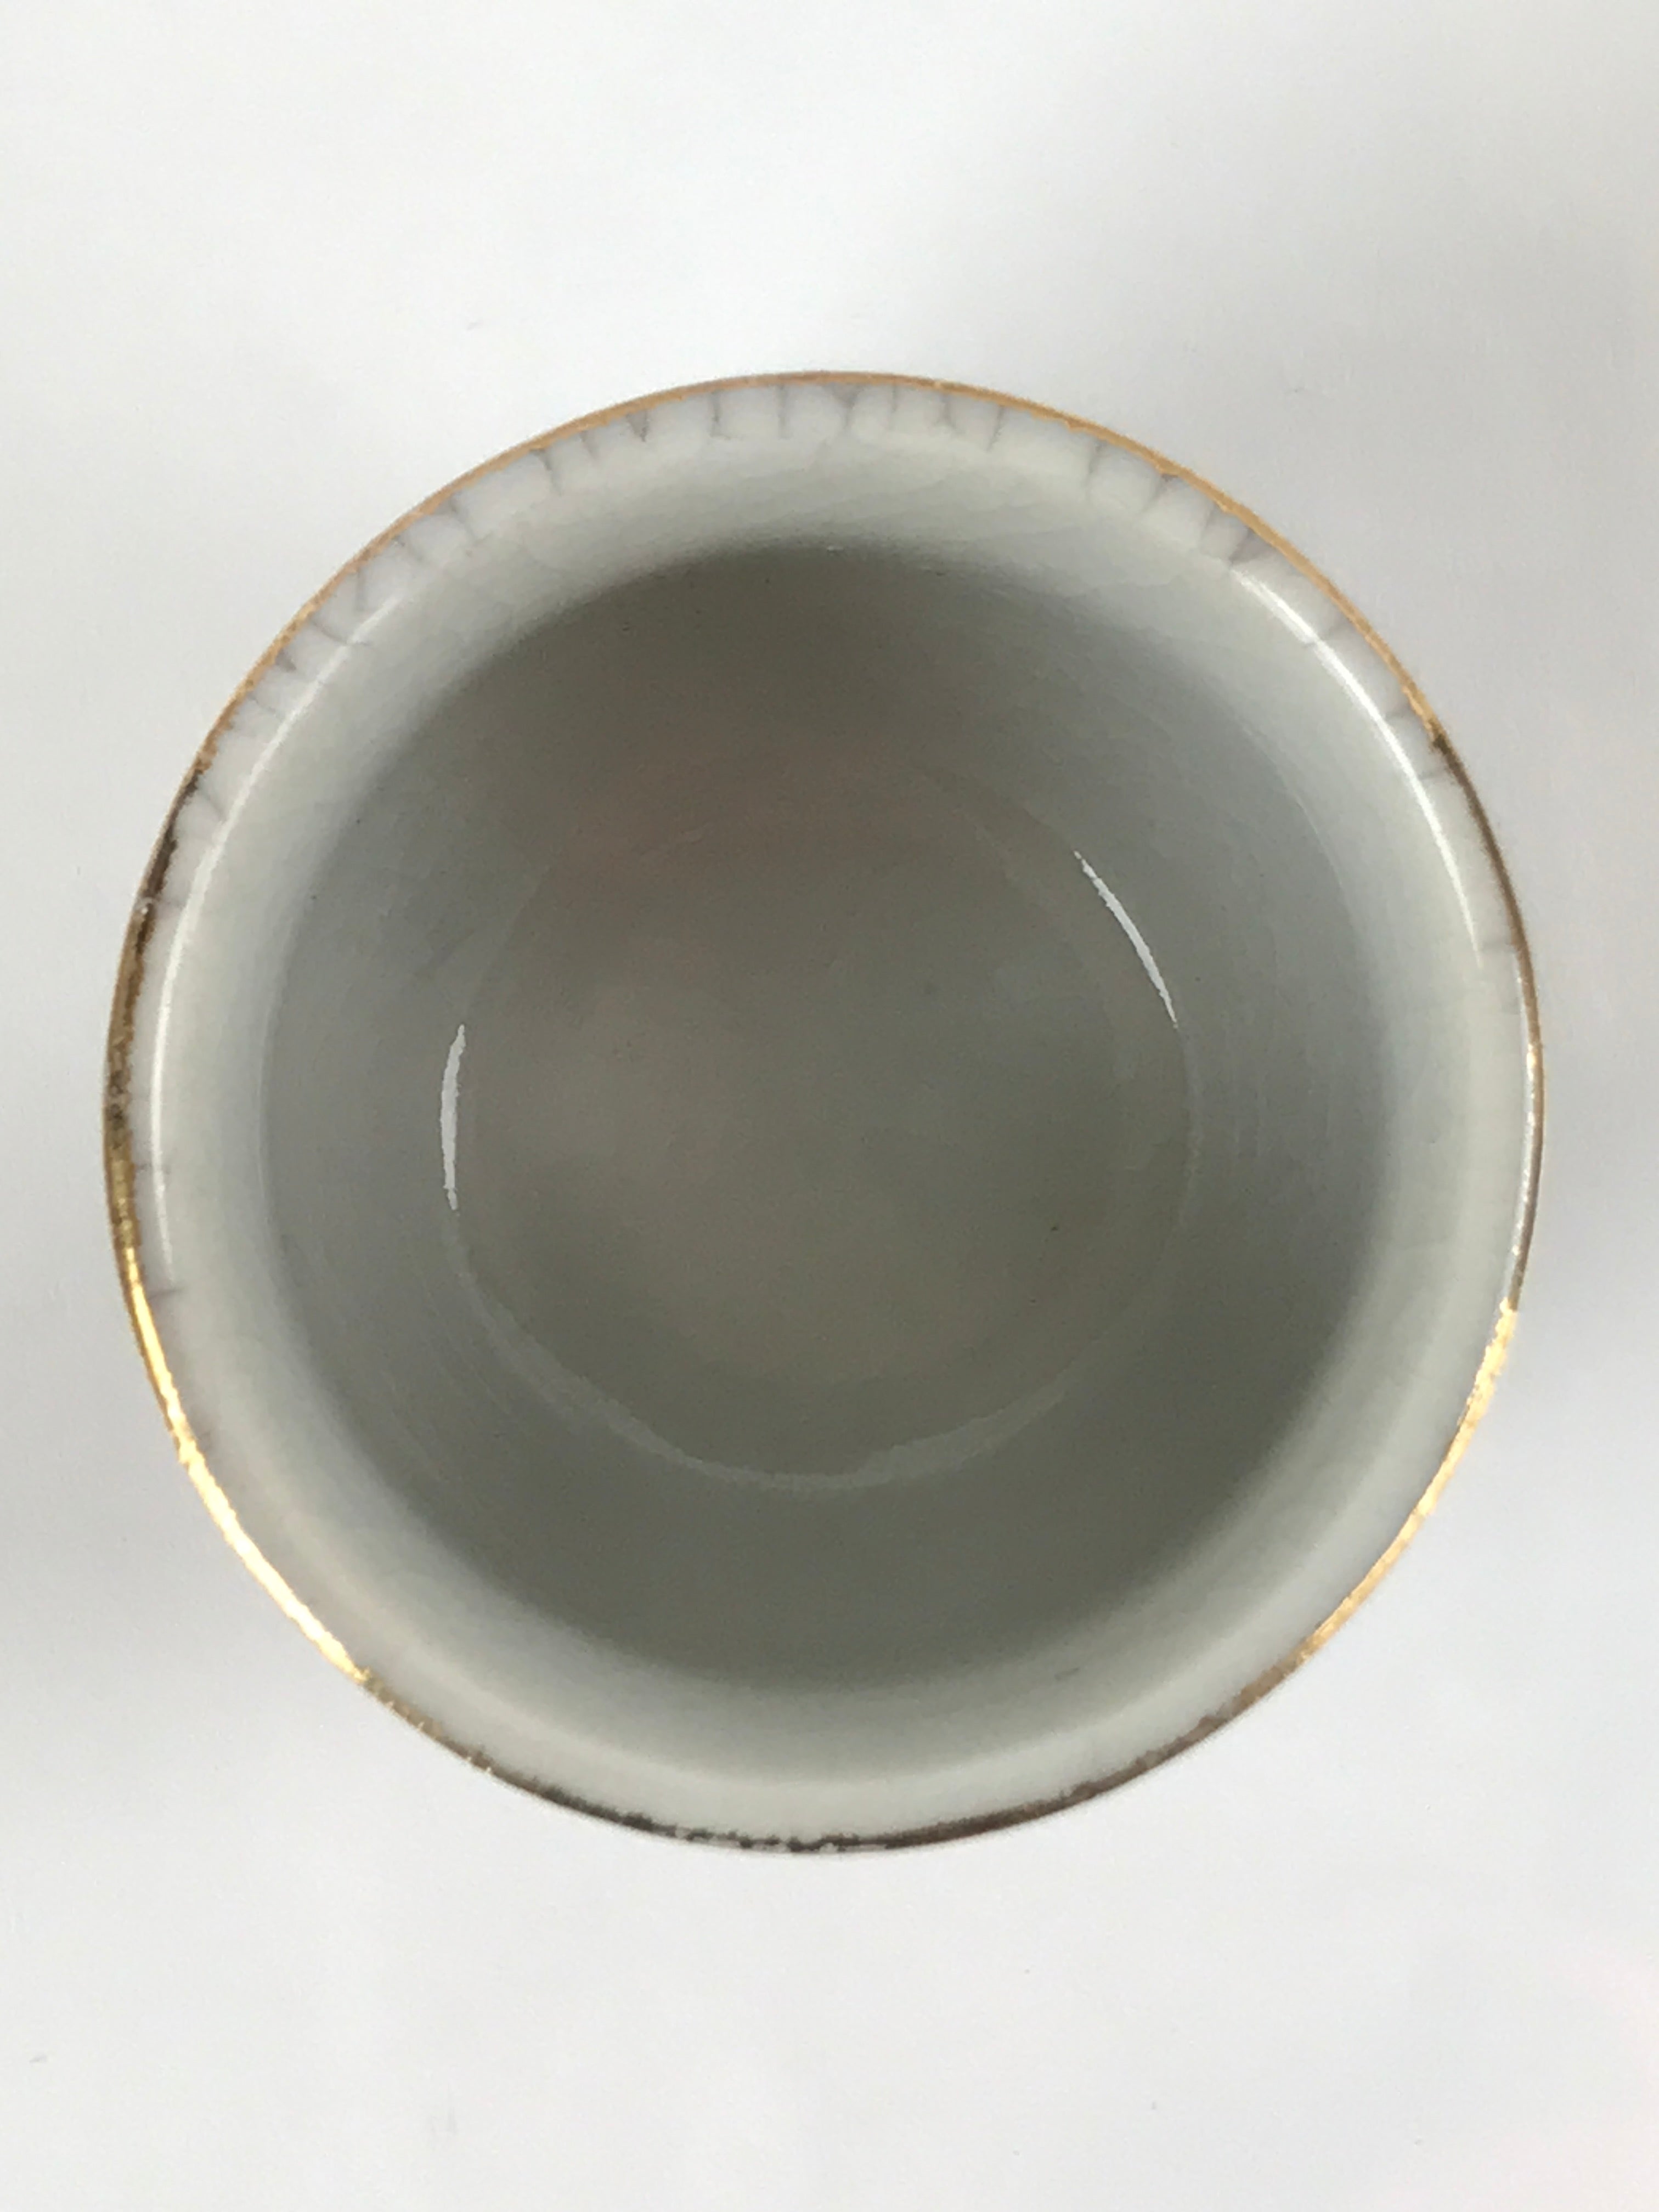 Japanese Porcelain Sake Cup Vtg Tsubomi Ochoko Guinomi Chrysanthemum Kiku G205